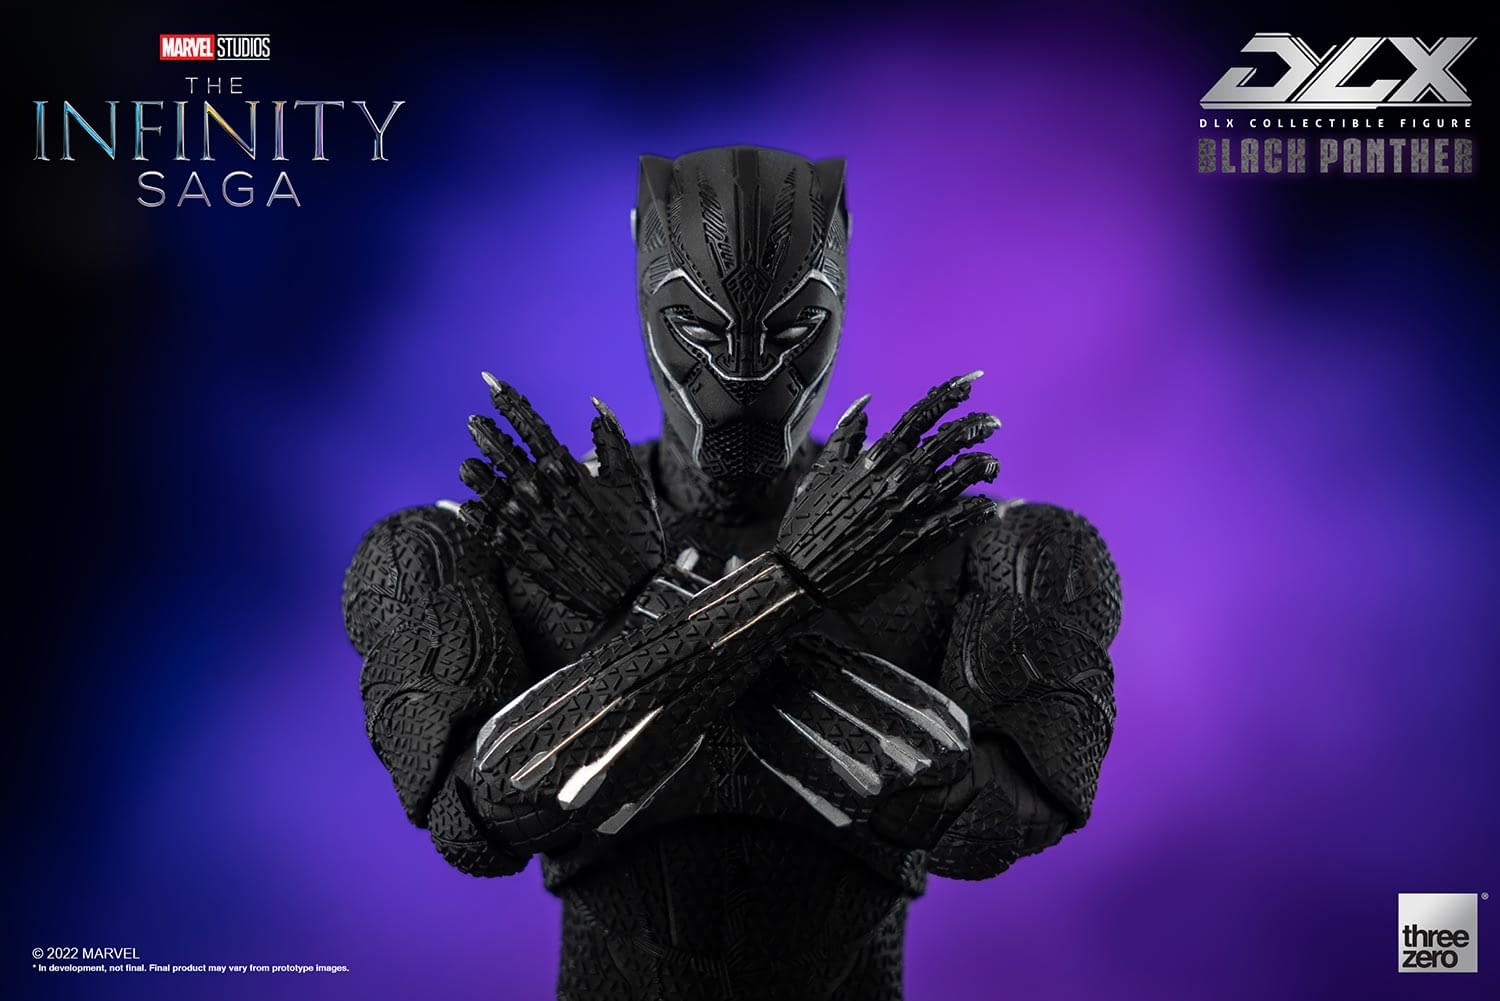 Black Panther Joins threezero's The Infinity Saga DLX Line 